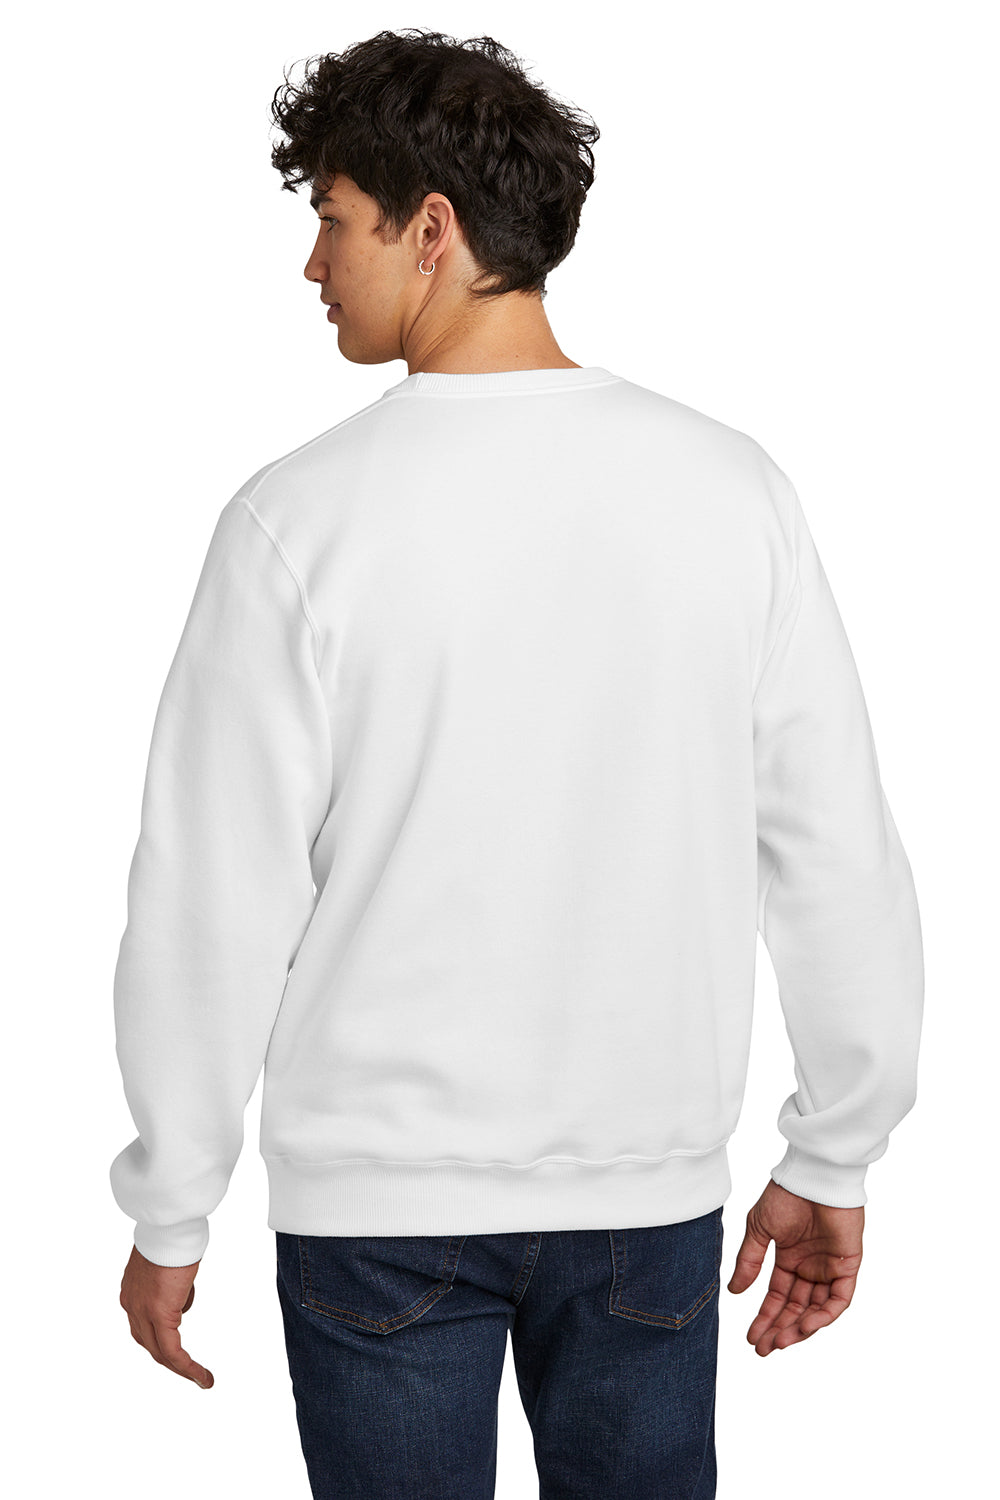 Jerzees 701M Mens Eco Premium Crewneck Sweatshirt White Back